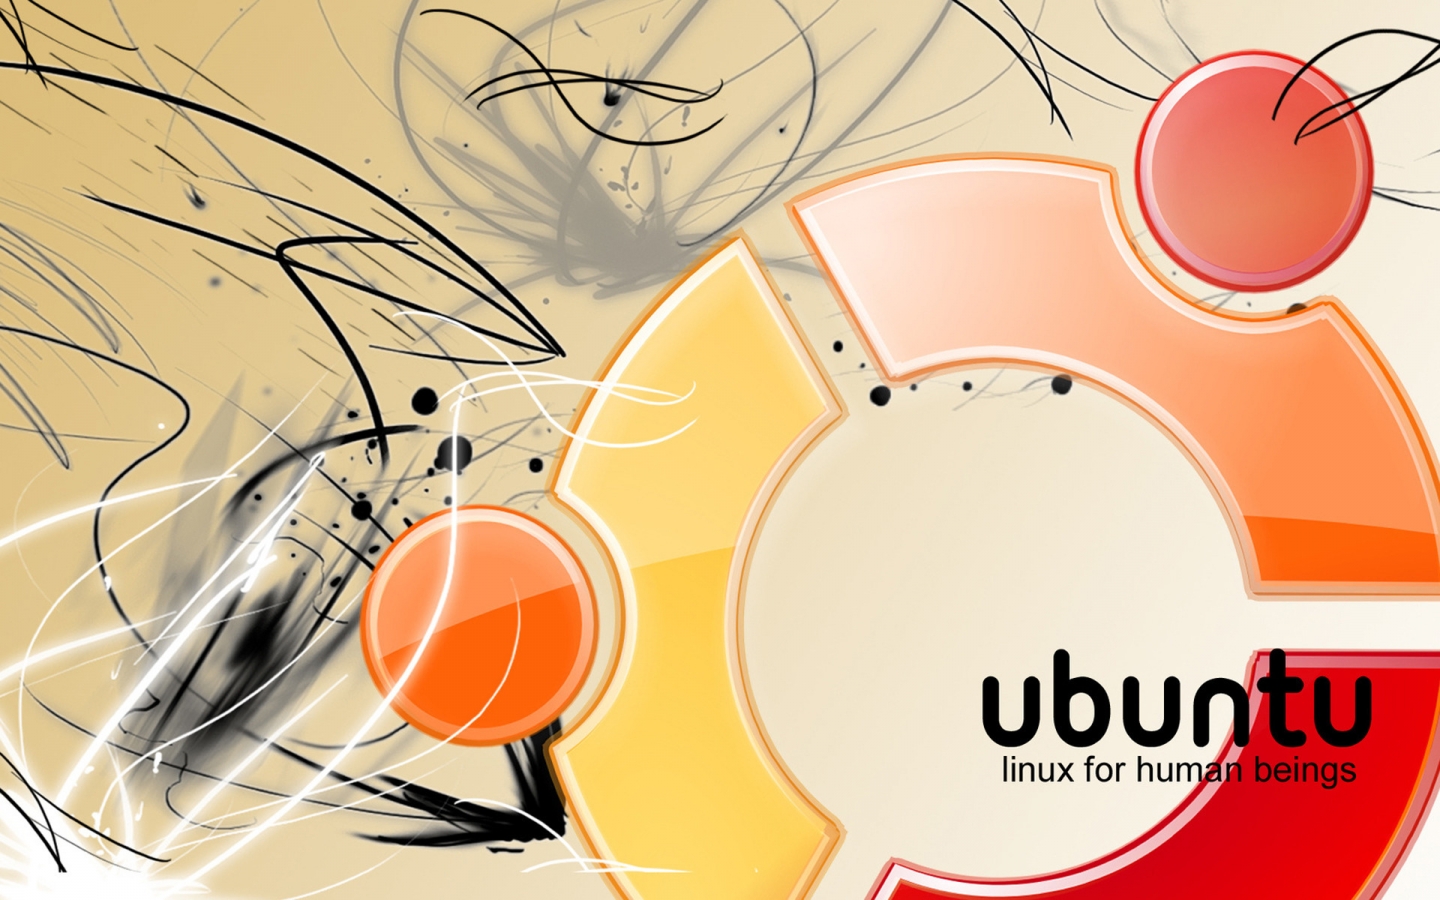 Ubuntu Linux for 1440 x 900 widescreen resolution